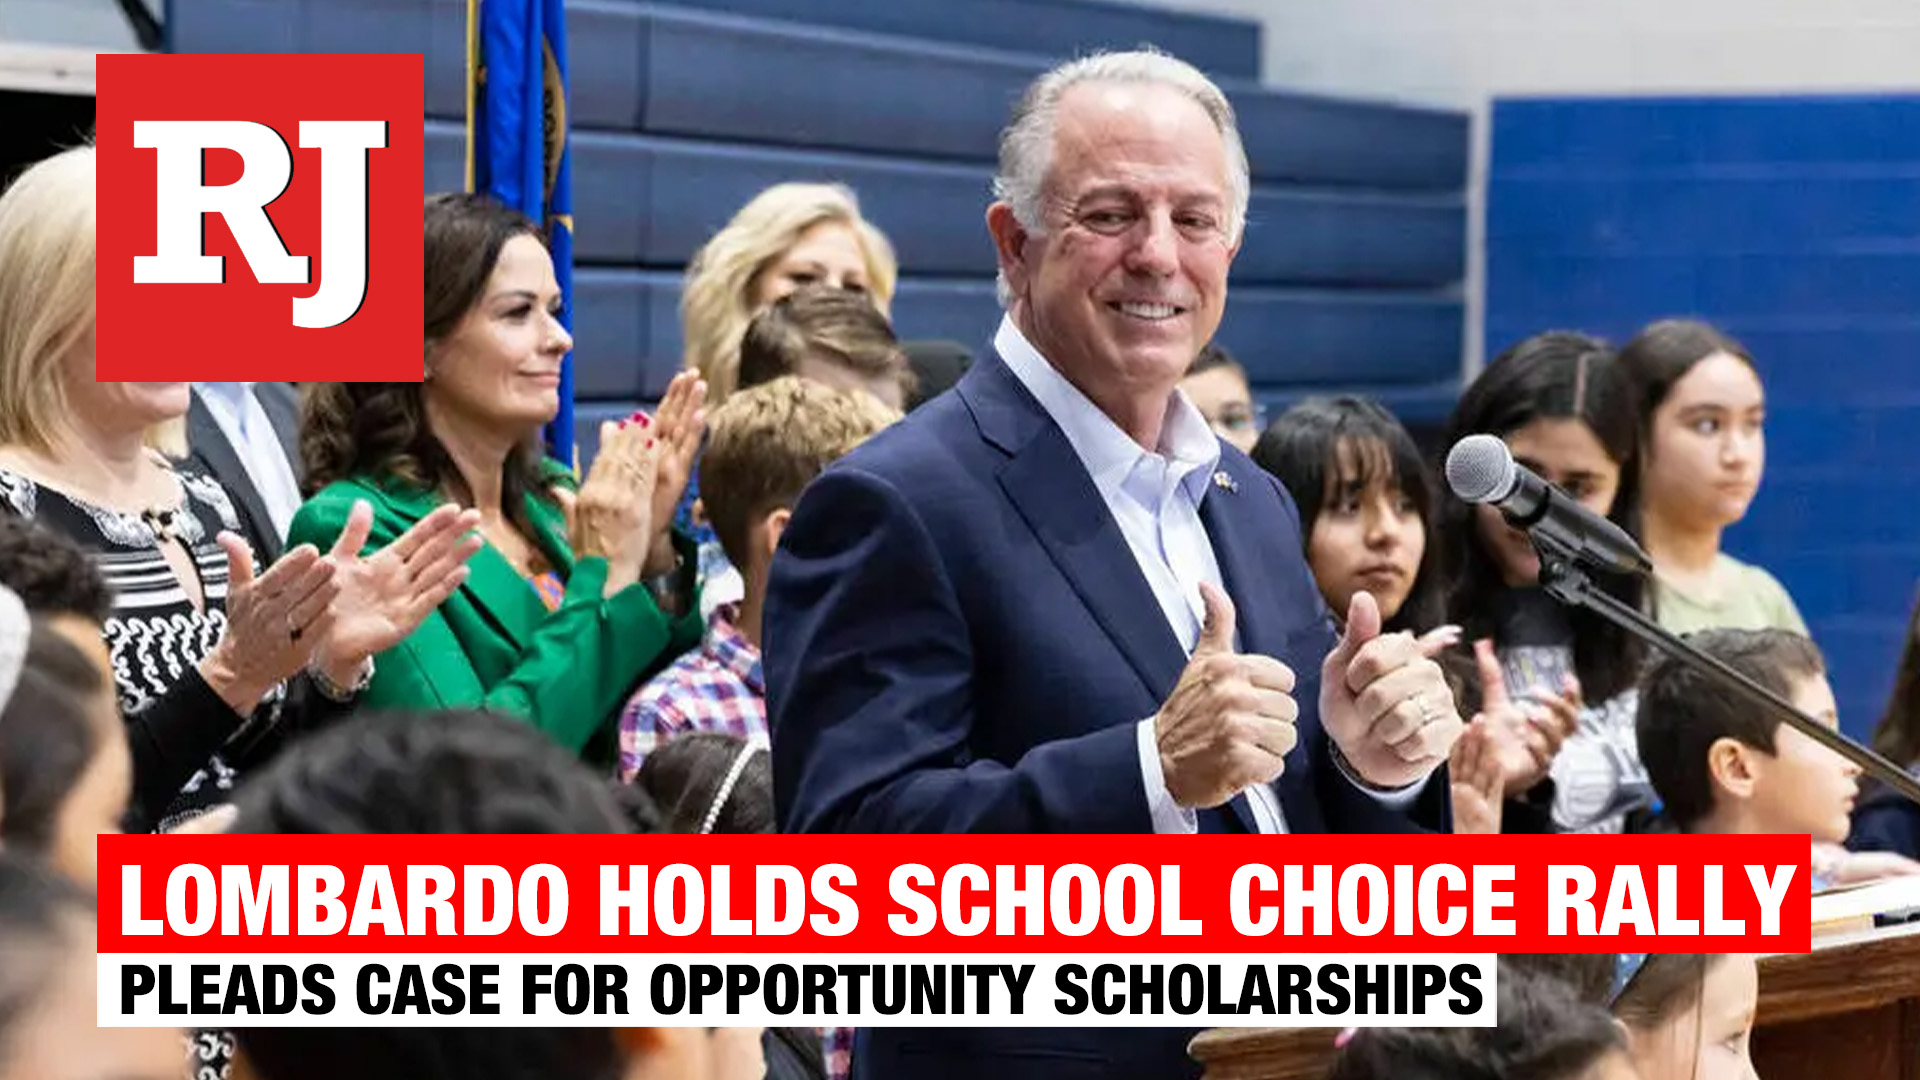 Lombardo Holds school choice rally